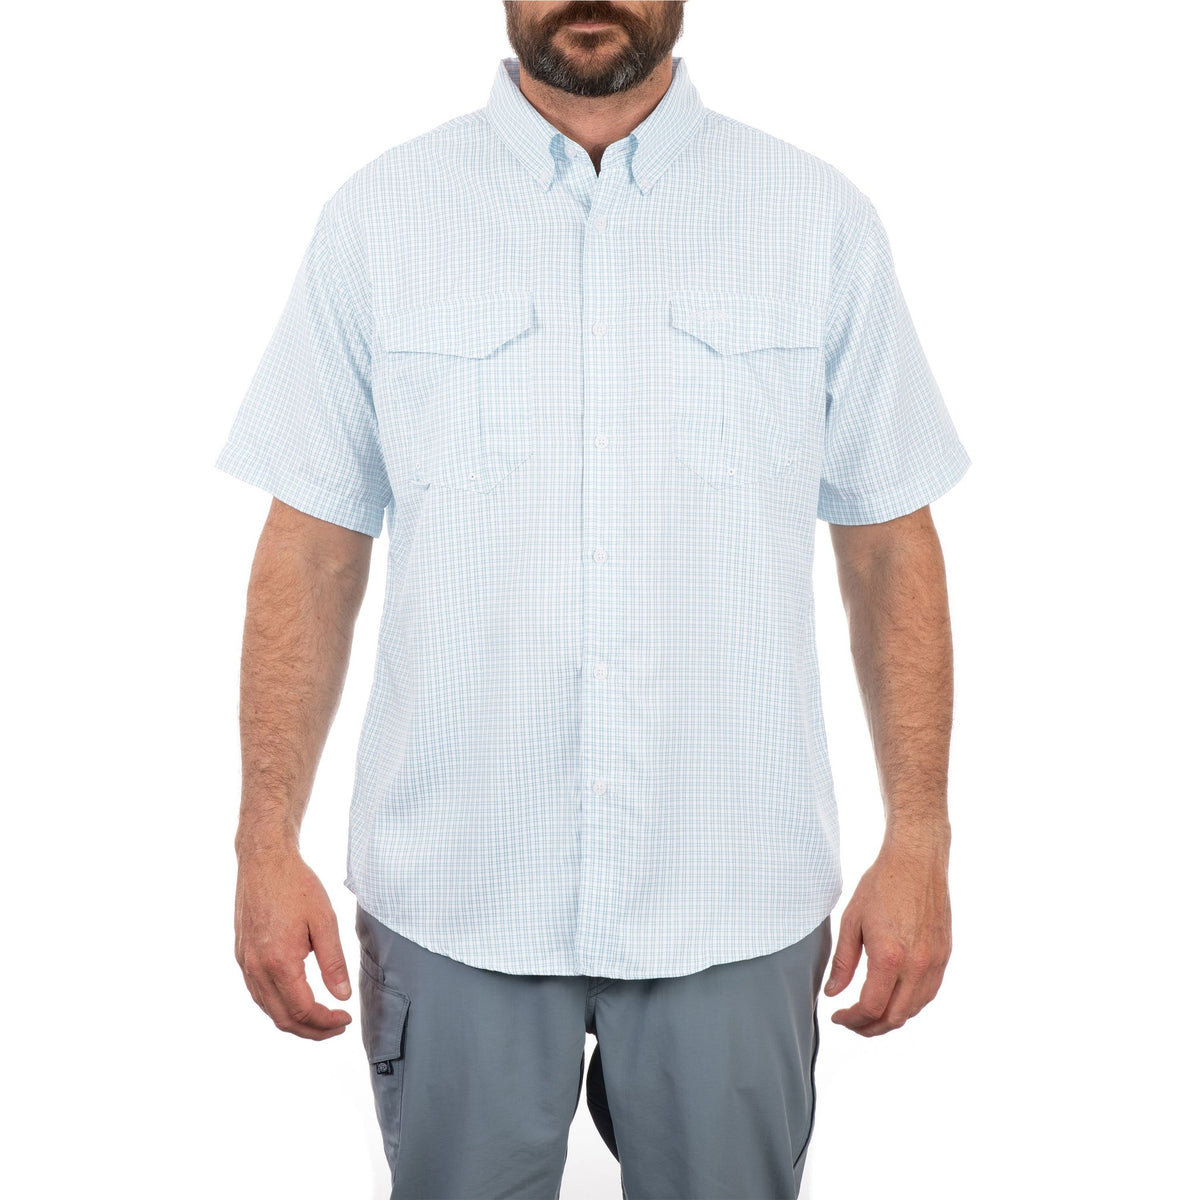 AFTCO Men's Sirius Vented Fishing Shirt - Short Sleeve - Moonlight Jade